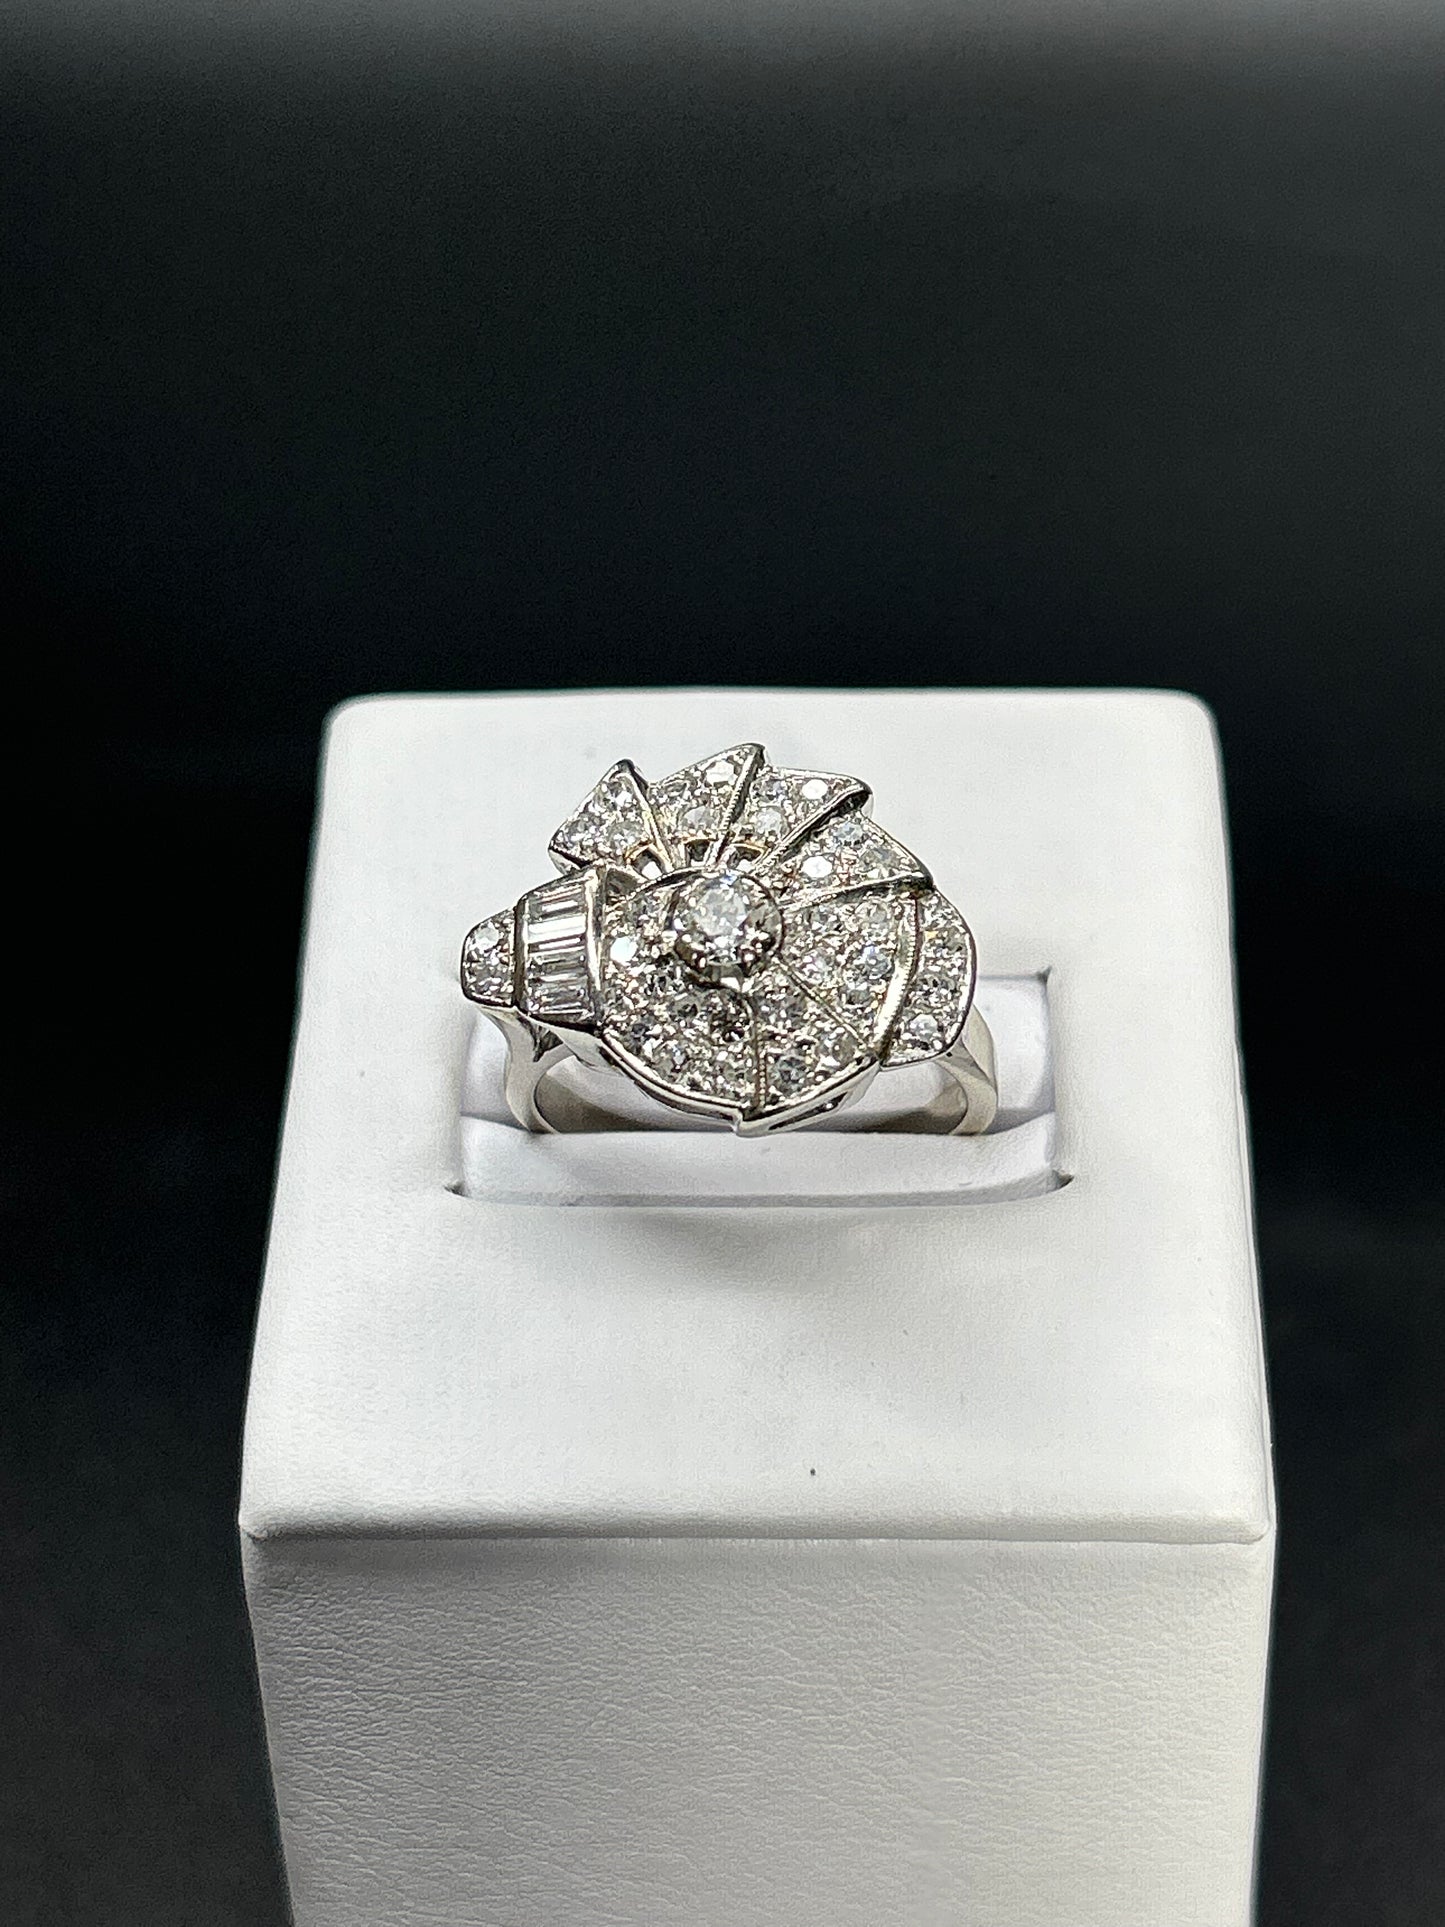 Vintage Art Deco 14k White Gold Diamond Ring